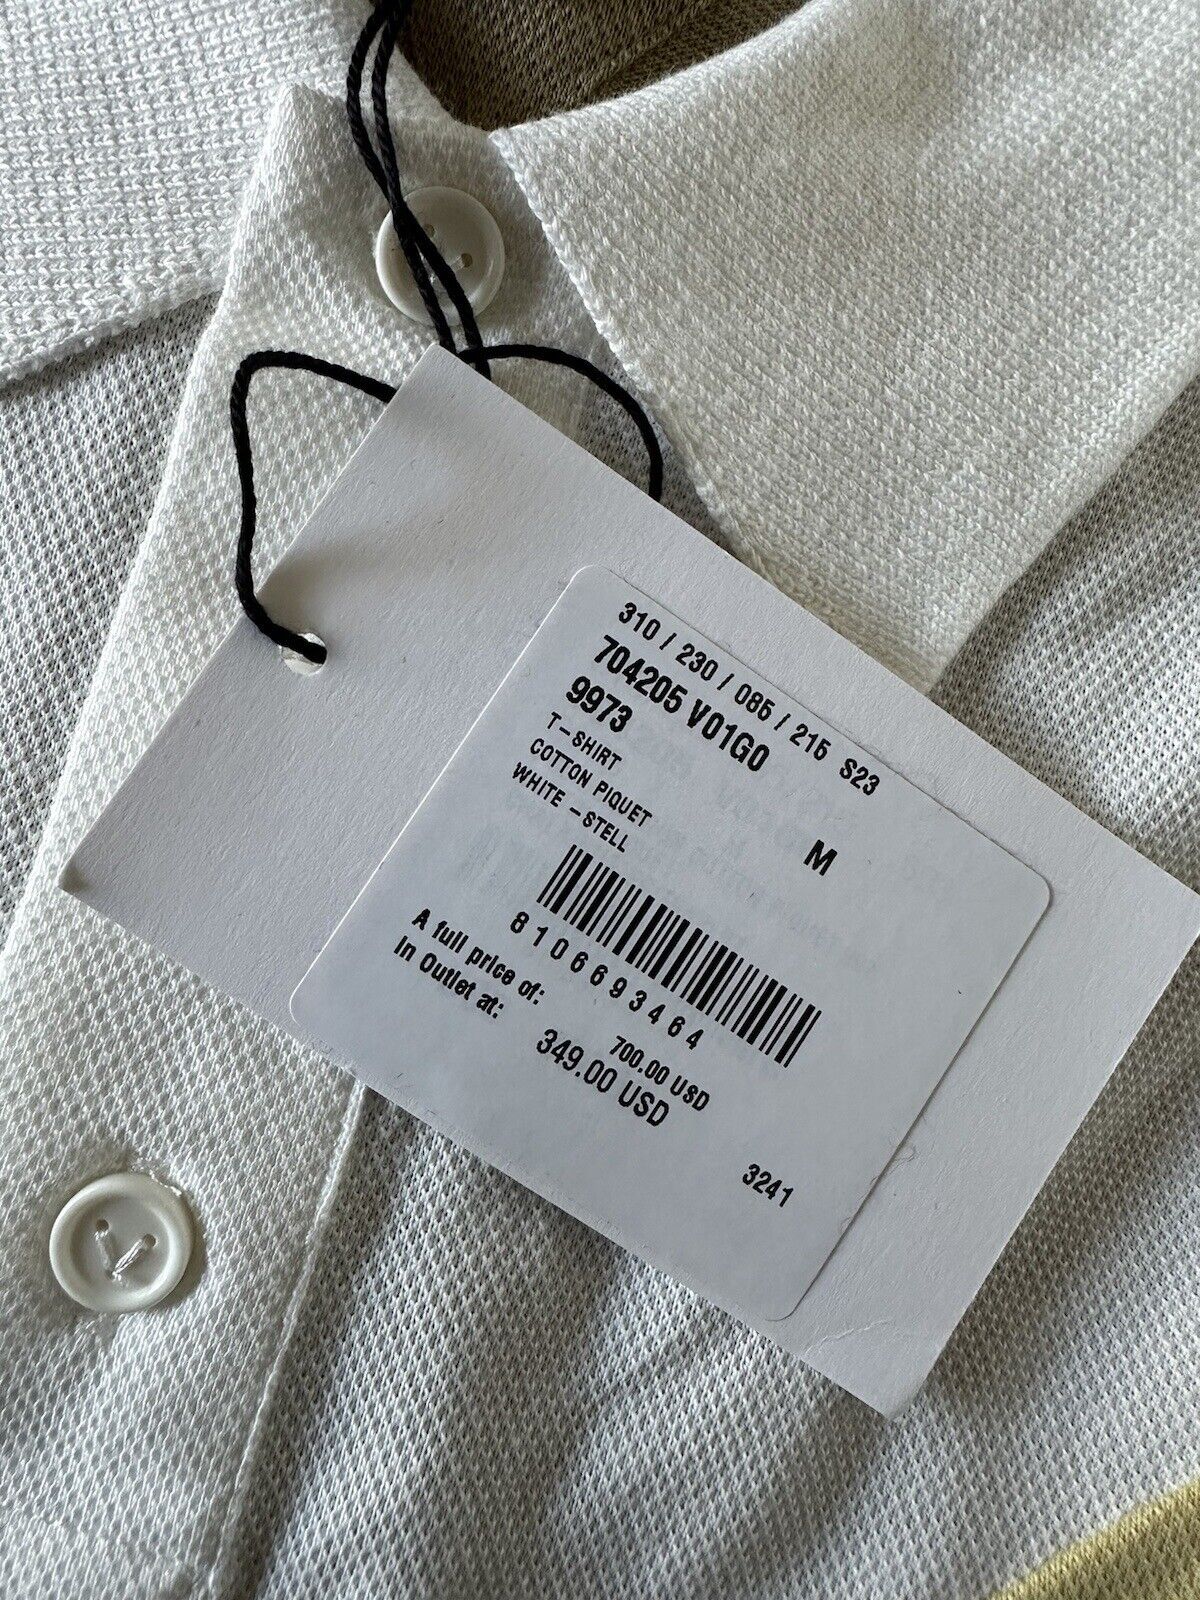 Мужская хлопковая рубашка-поло пике Bottega Veneta, размер M (размер оверсайз), 704205, NWT, 700 долларов США 